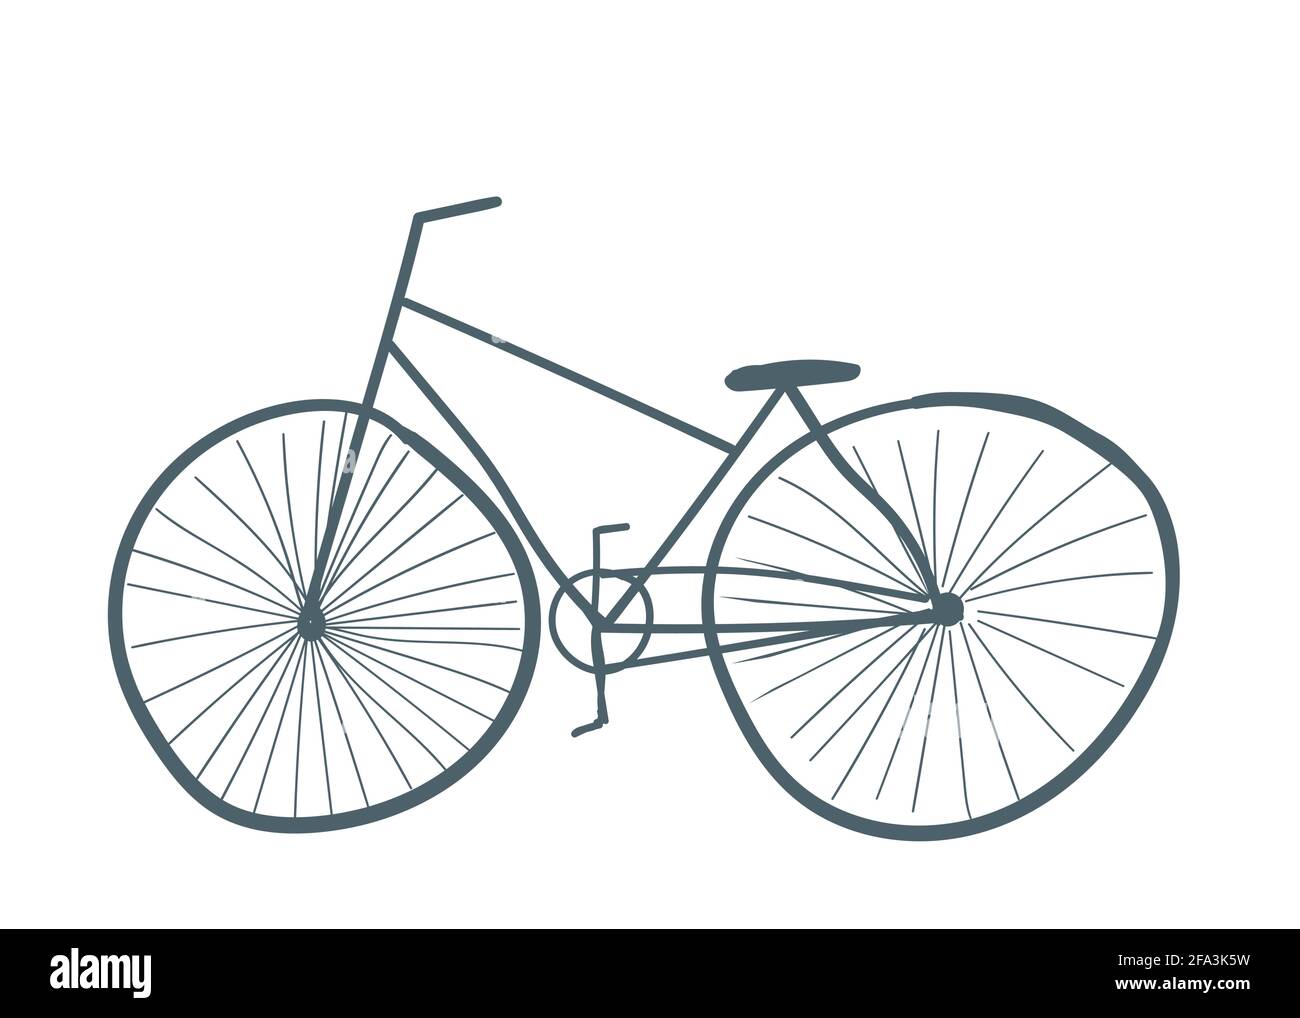 Graue Farbe Fahrrad. Isolierte Transport. Hand gezeichnet Cartoon-Stil,  Vektor-Illustration Stock-Vektorgrafik - Alamy